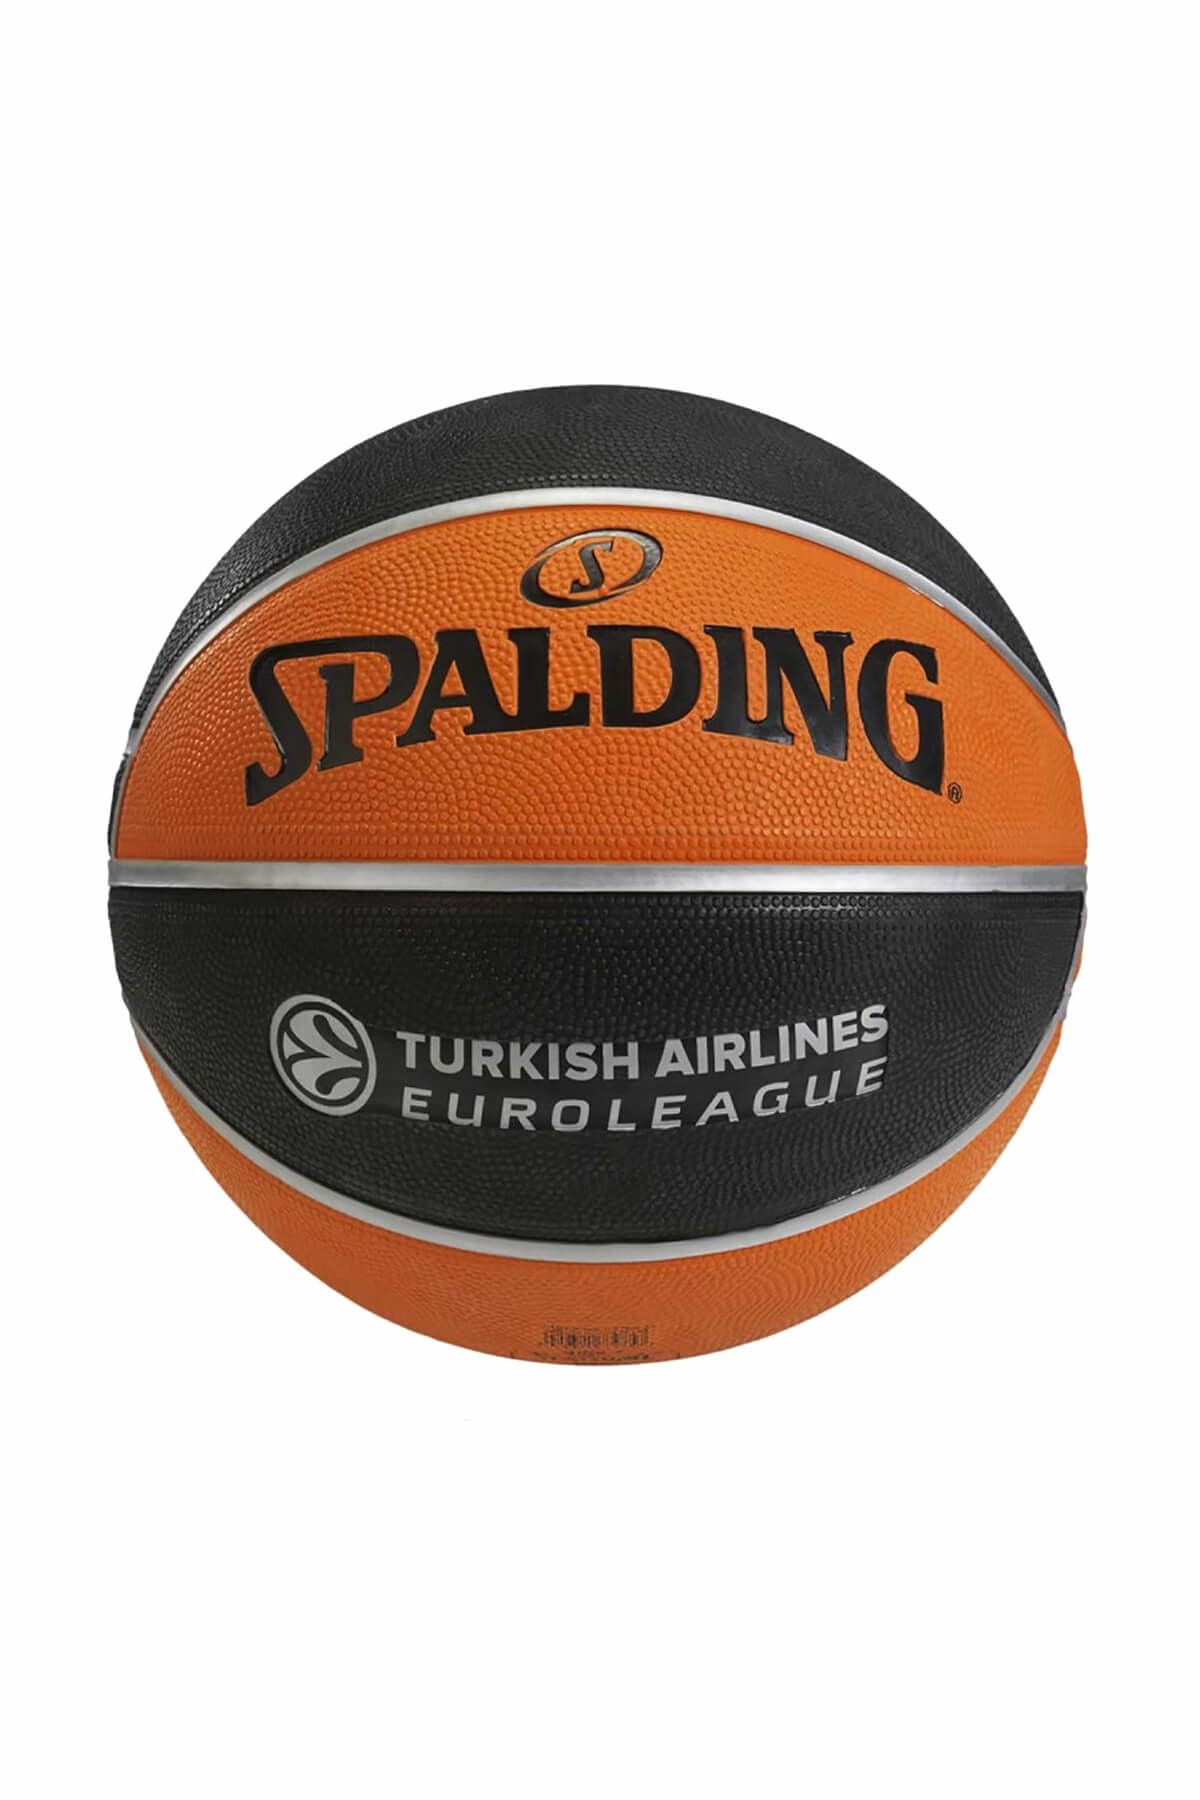 Spalding TF-150 Turkish Airlines Euroleague Basketbol Topu 73-985Z